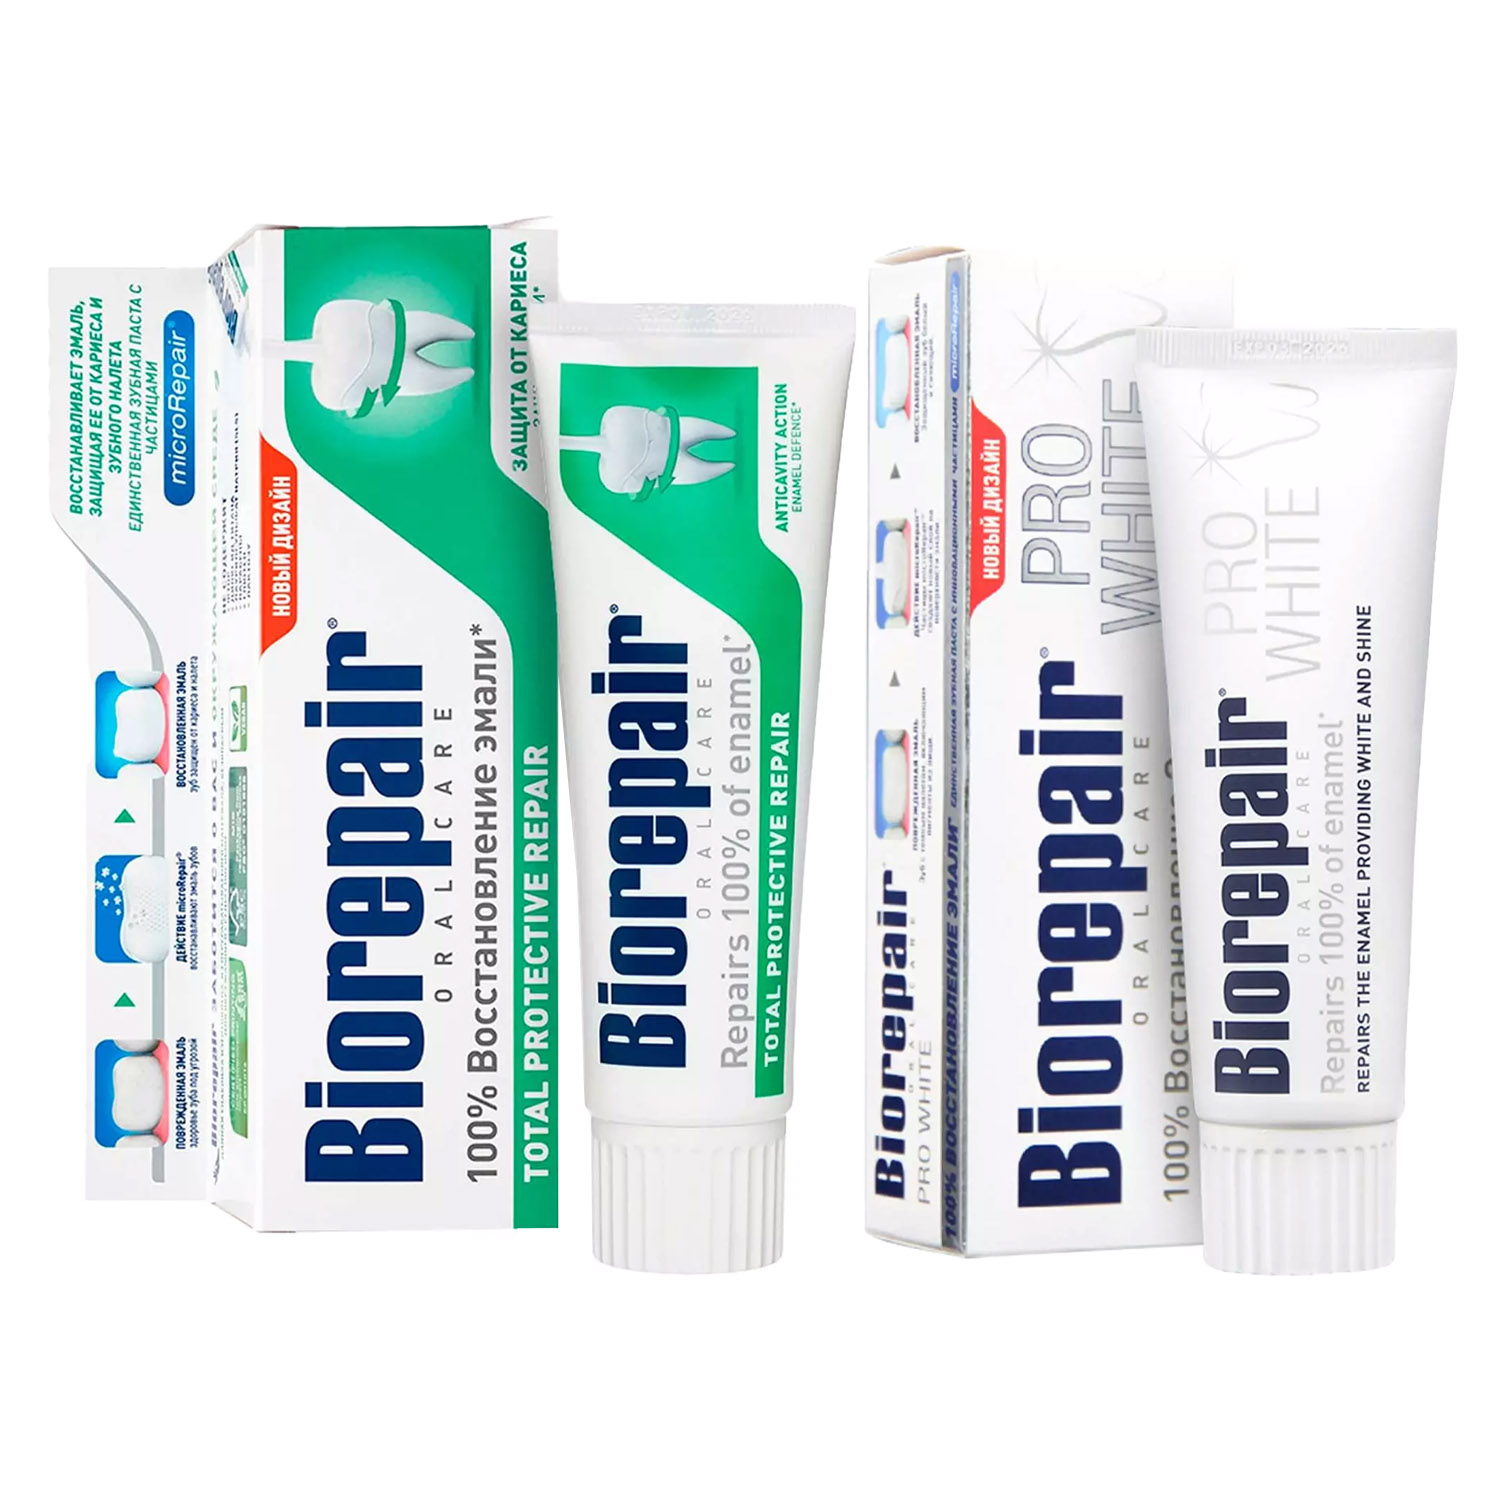 Biorepair Набор зубных паст для комплексной защиты, 2х75 мл (Biorepair, Ежедневная забота) biorepair набор зубных паст для комплексной защиты зубов и эмали 2х75 мл biorepair ежедневная забота